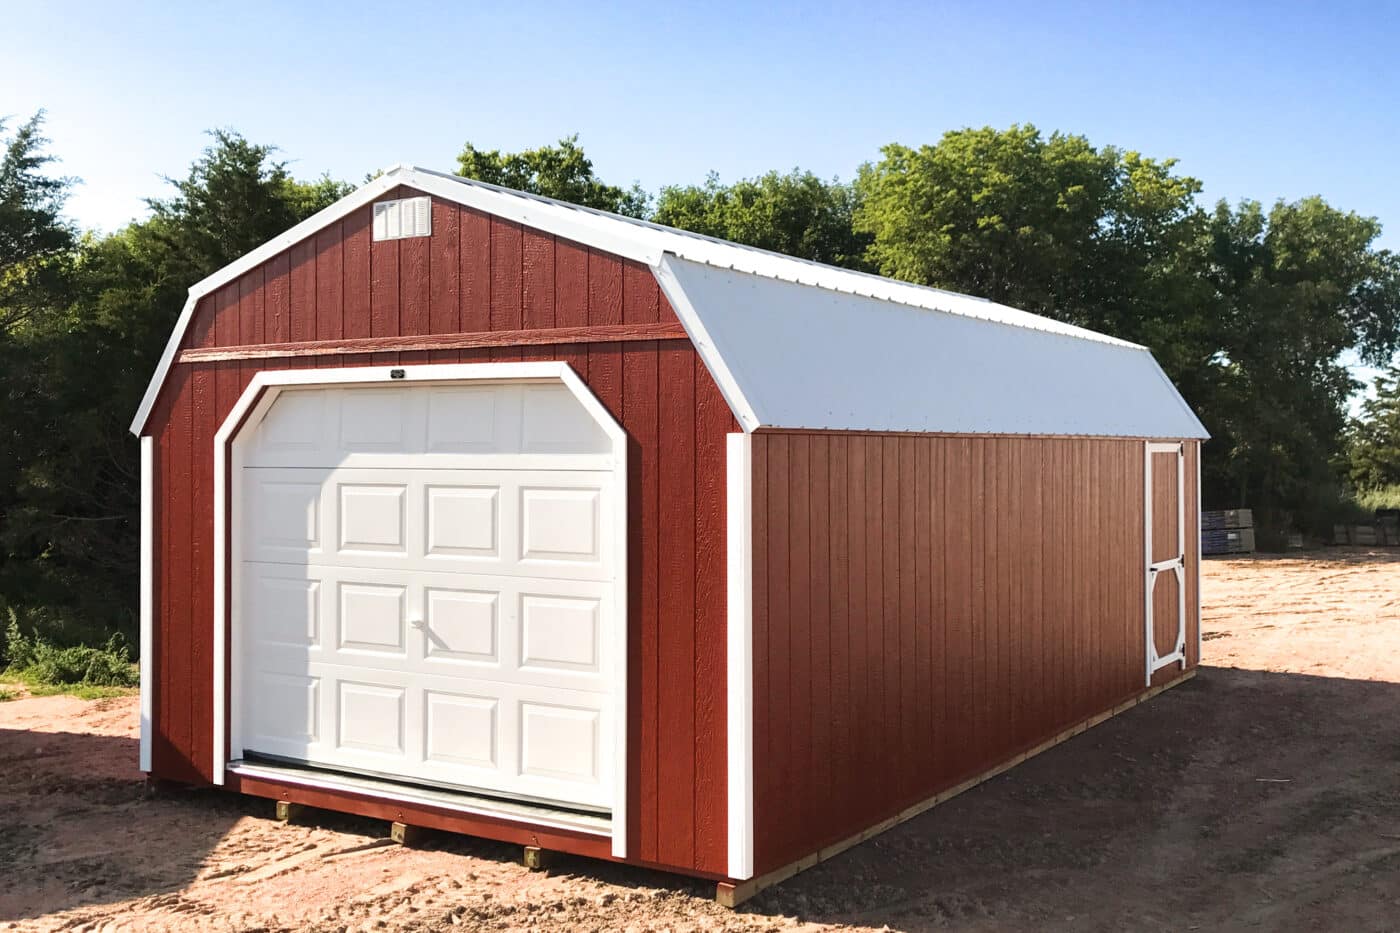 Red high barn prefab garage shed in field